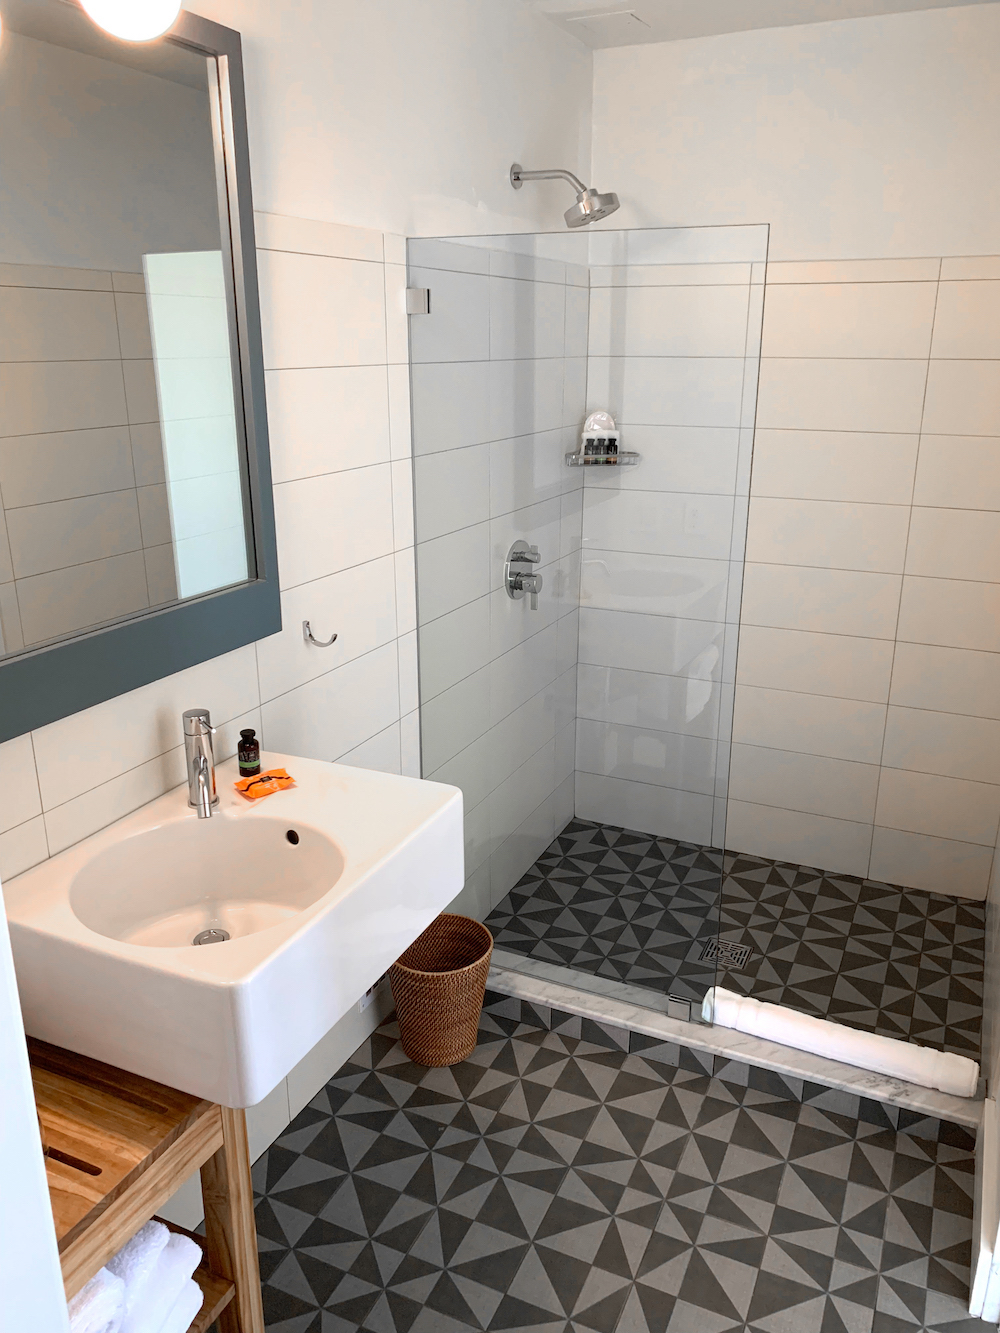 Hotel Bathrooms, Hotel Tubs, Industrial Decor, Staycation